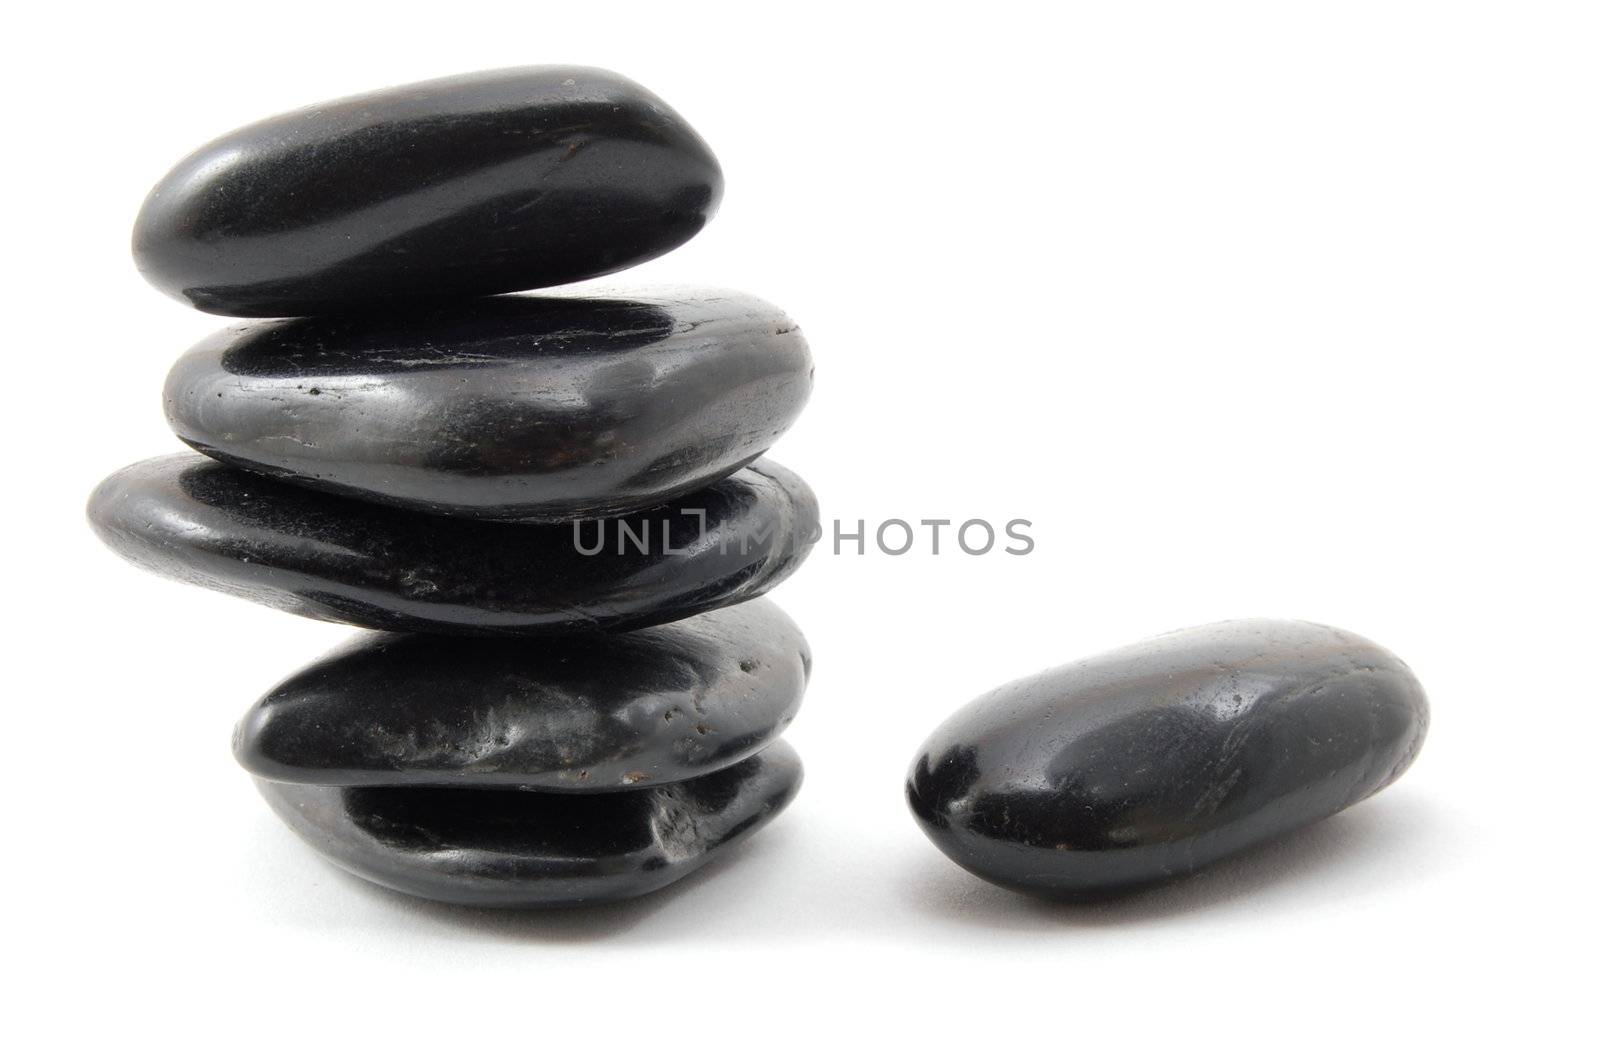 stones in balance by gunnar3000